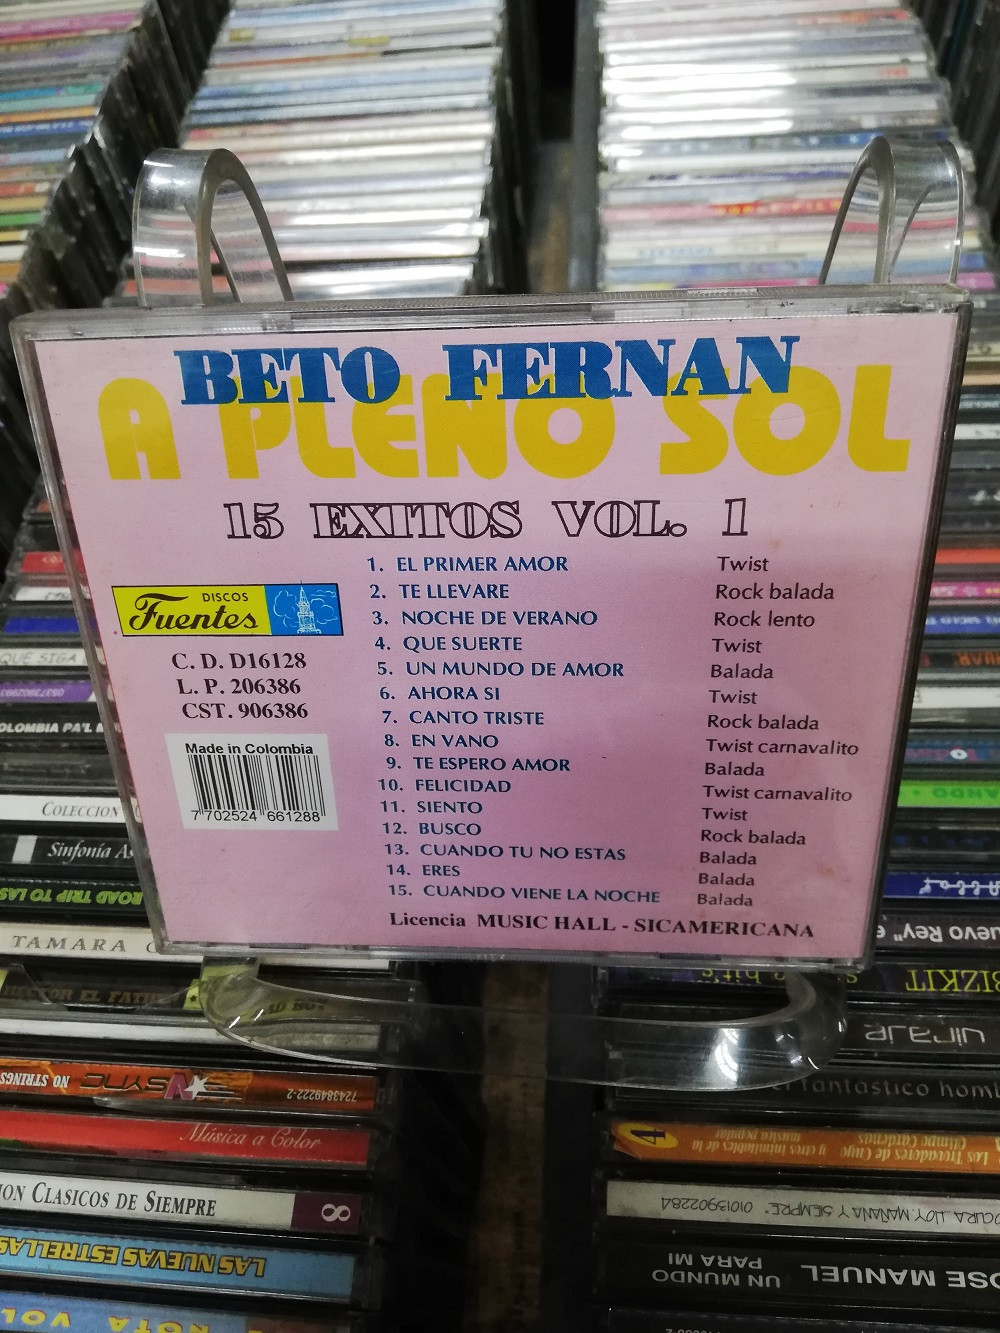 Imagen CD BETO FERNAN - A PLENO SOL VOL. 1 2